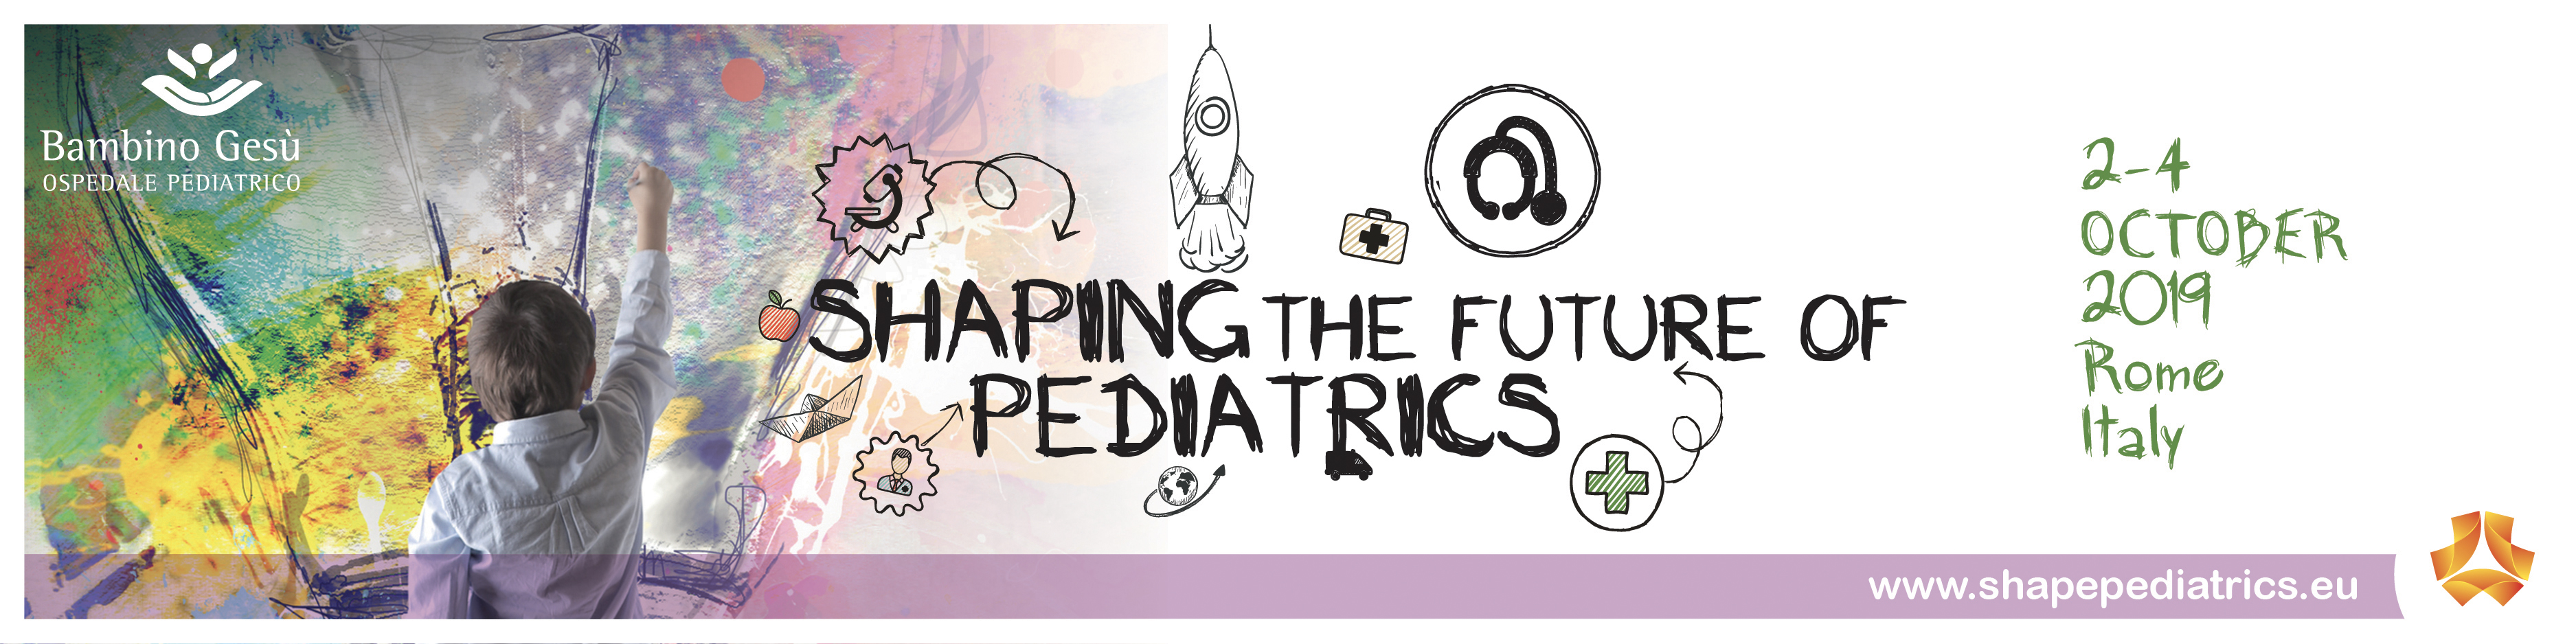 Shaping the Future of Pediatrics